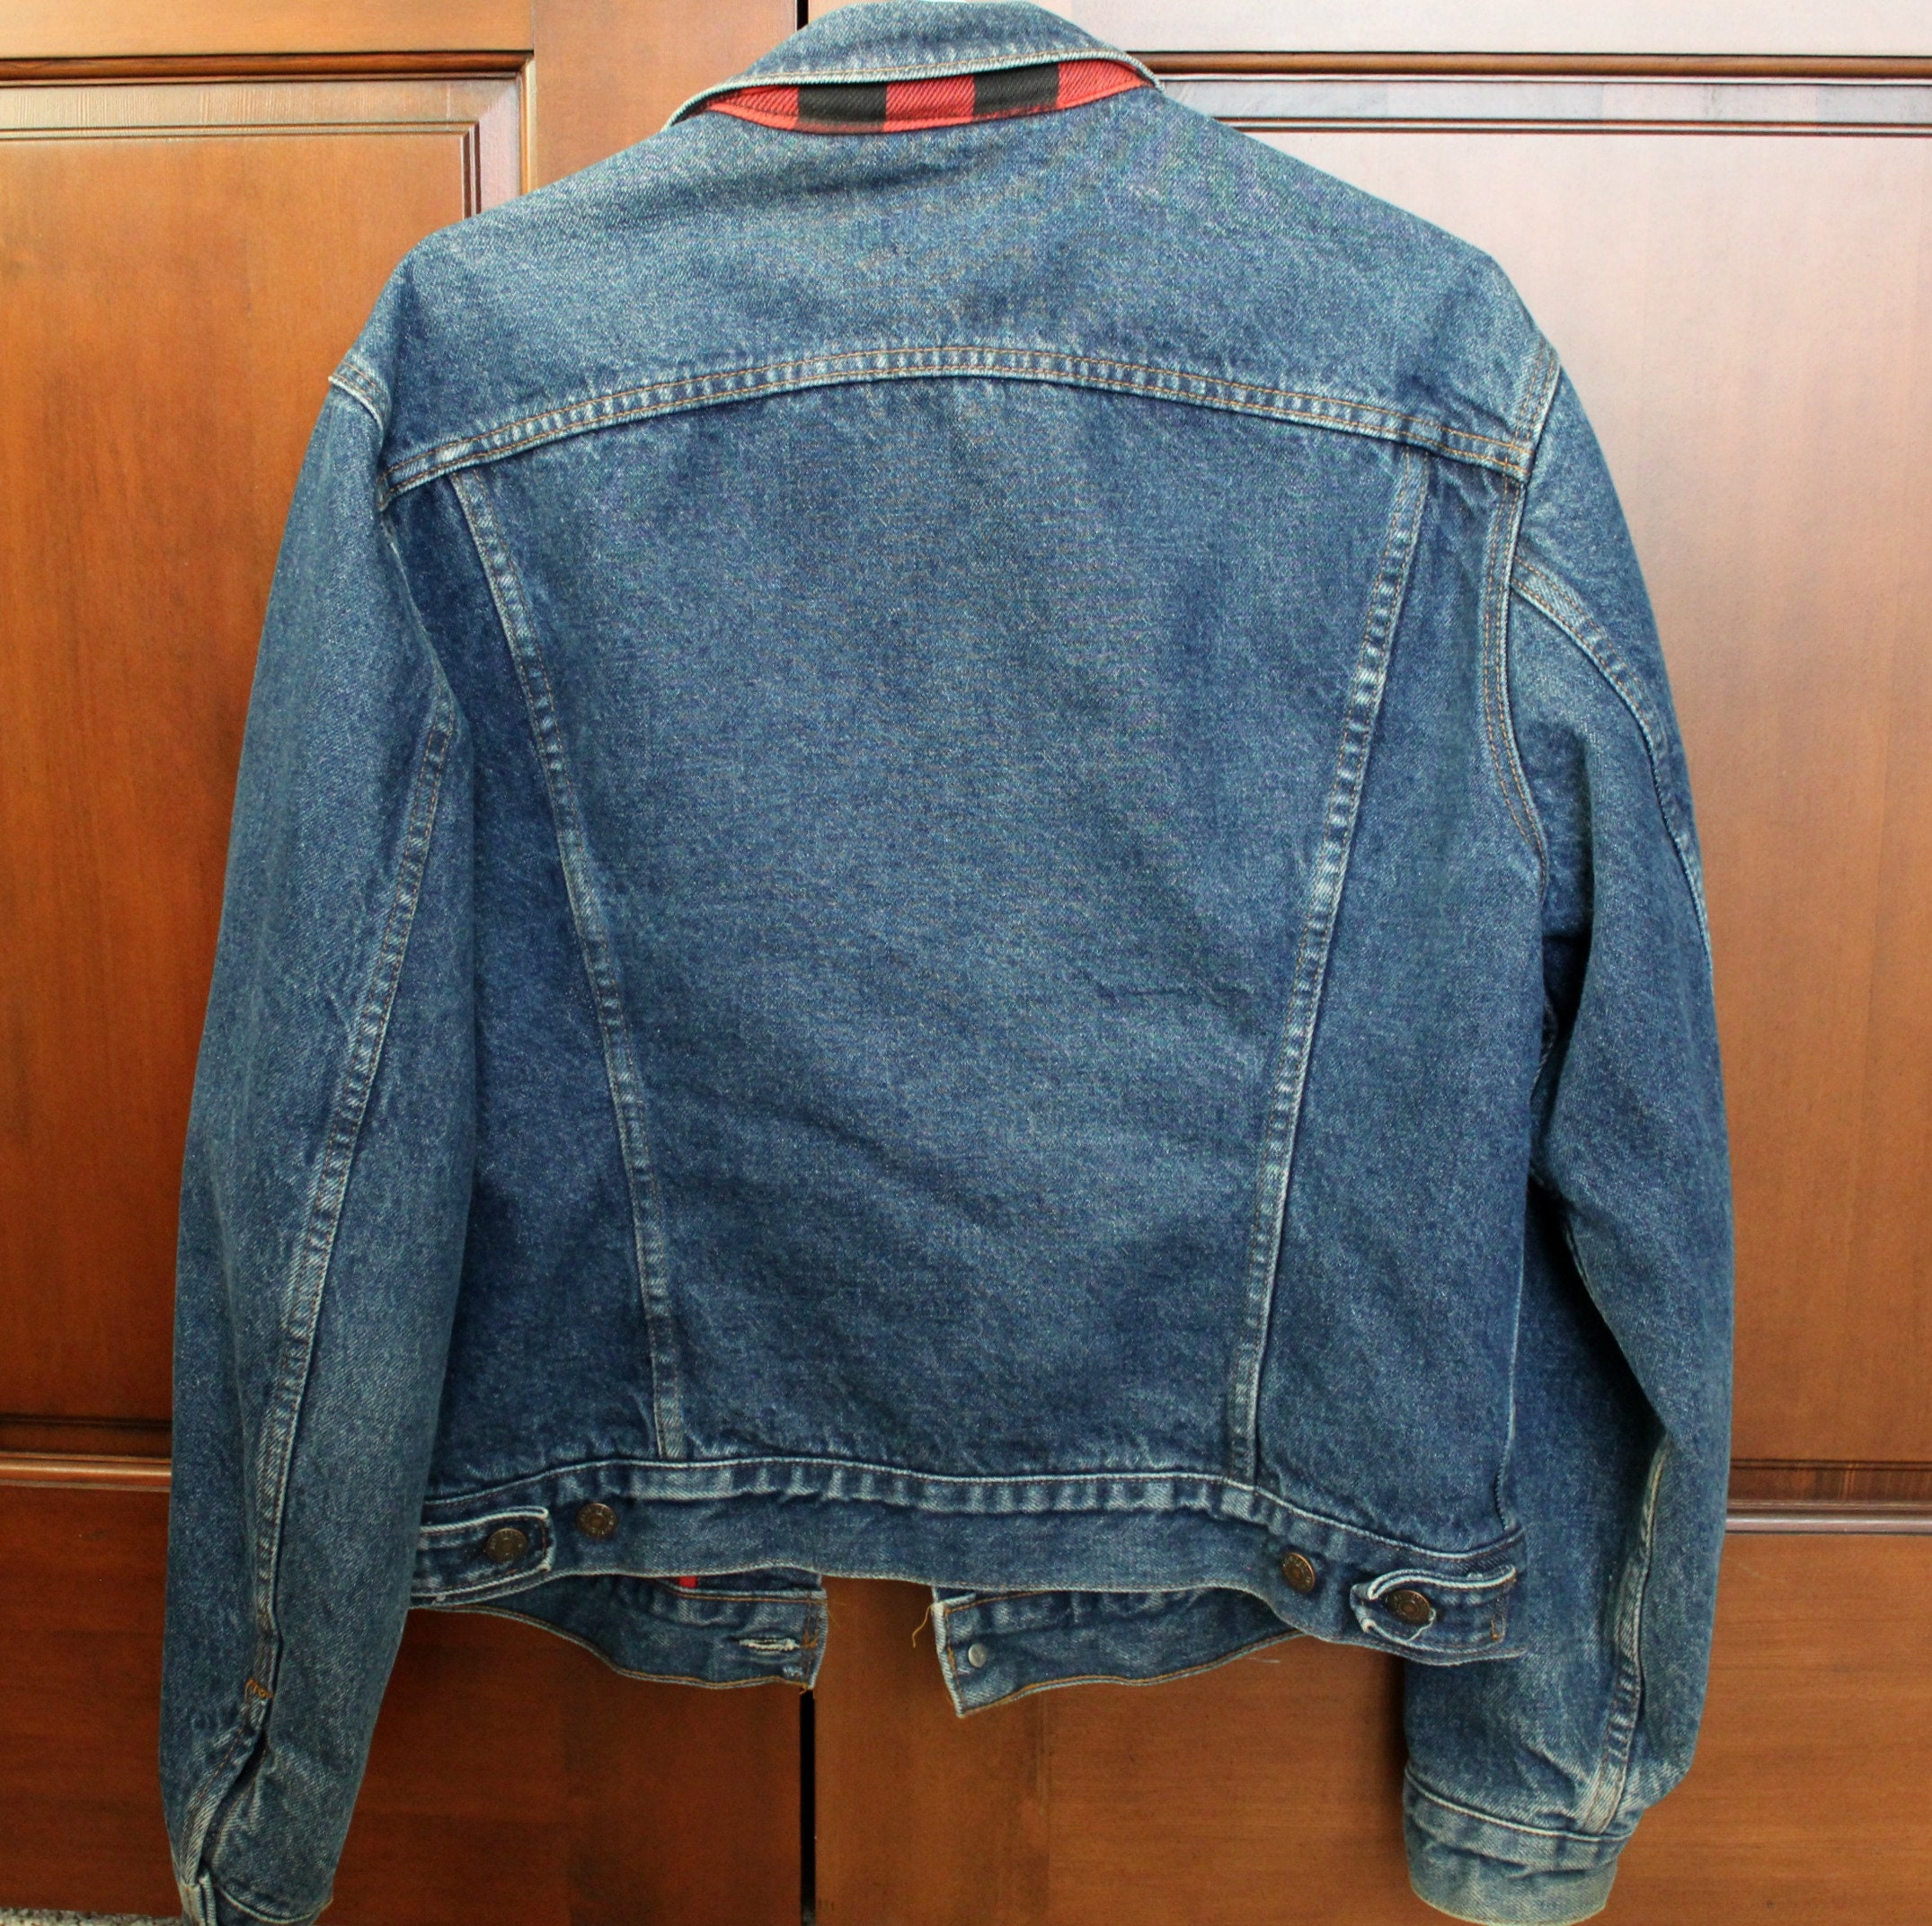 Vintage Levi Trucker Jacket Plaid Flannel Lined Denim Jean Jacket Sz 44